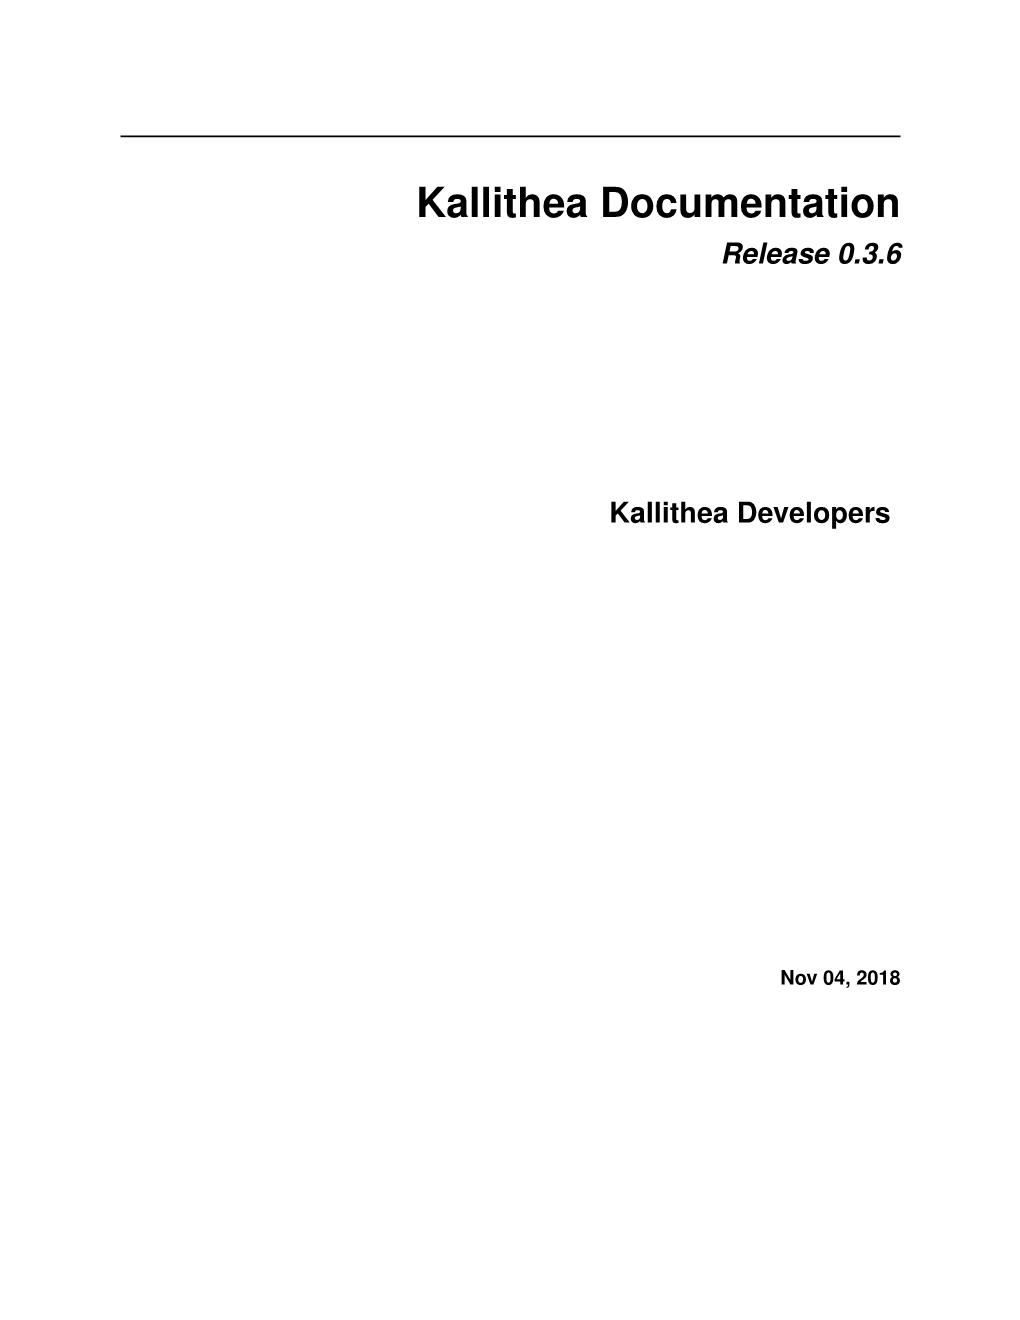 Kallithea Documentation Release 0.3.6